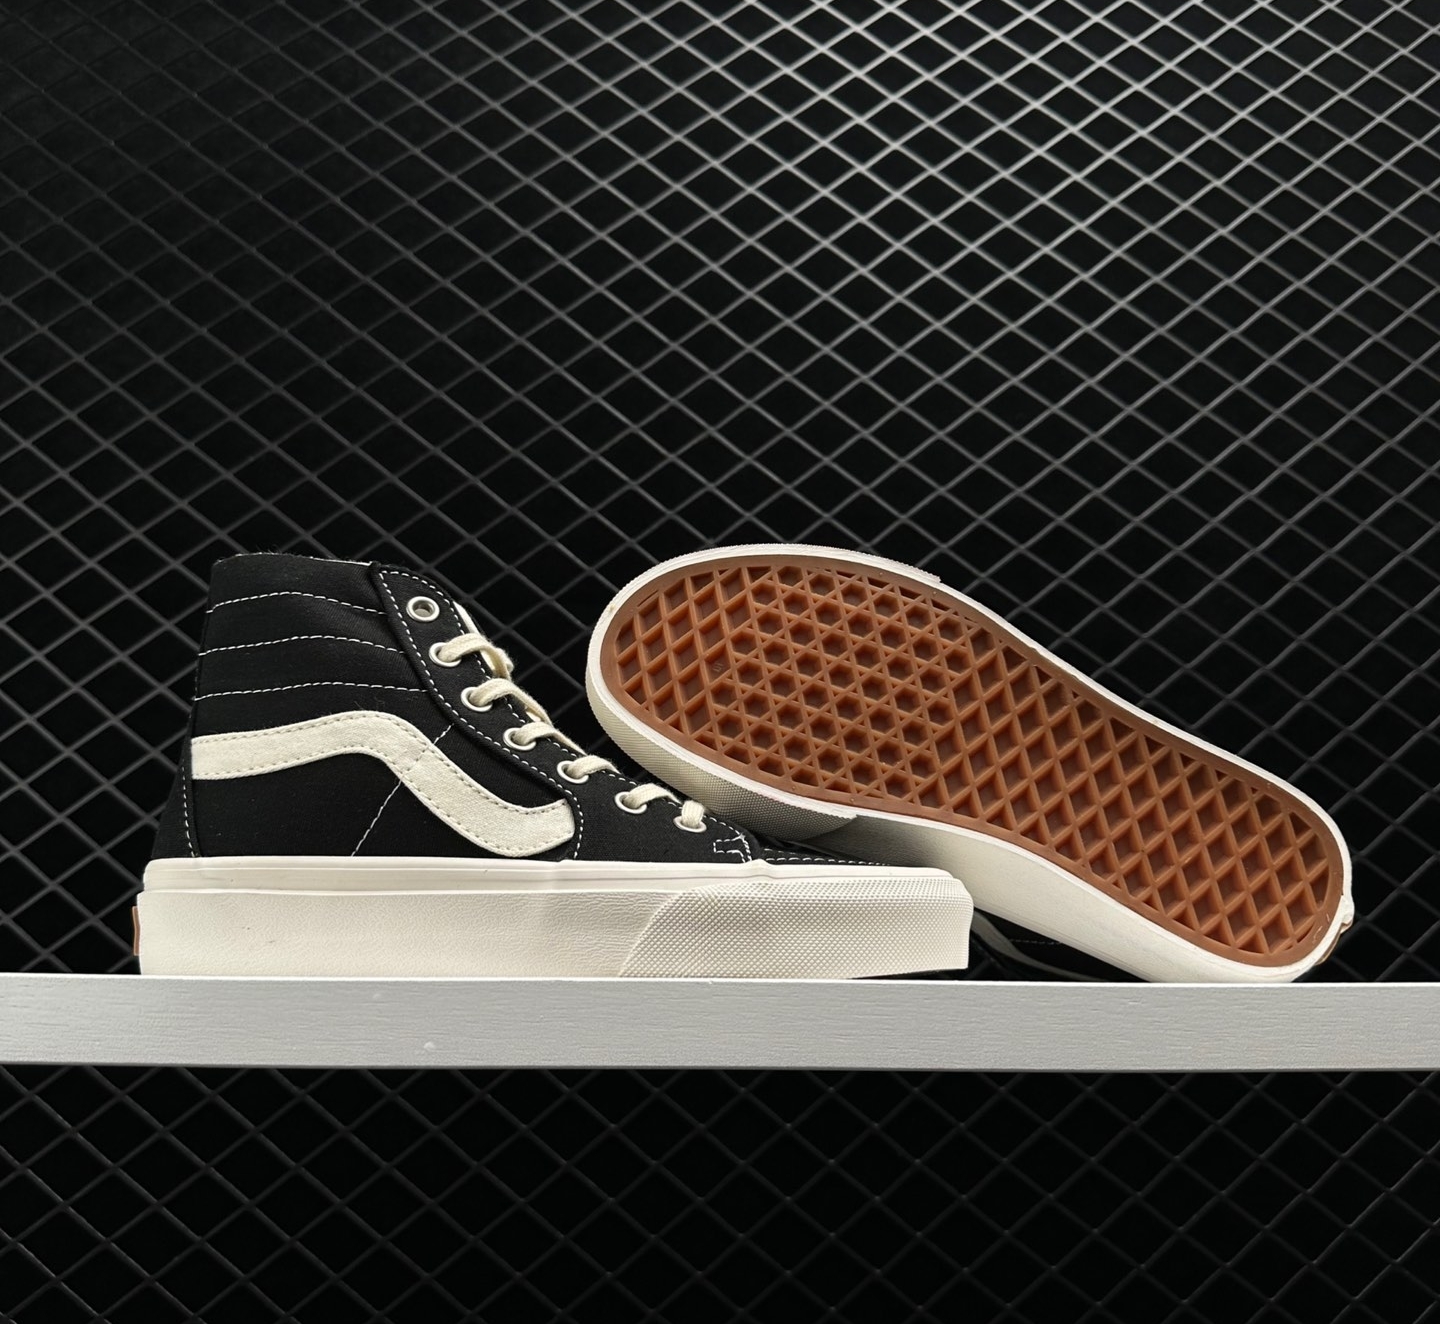 Vans Sk8-Hi Tapered VR3 Shoes Black - Ultimate Style and Comfort!